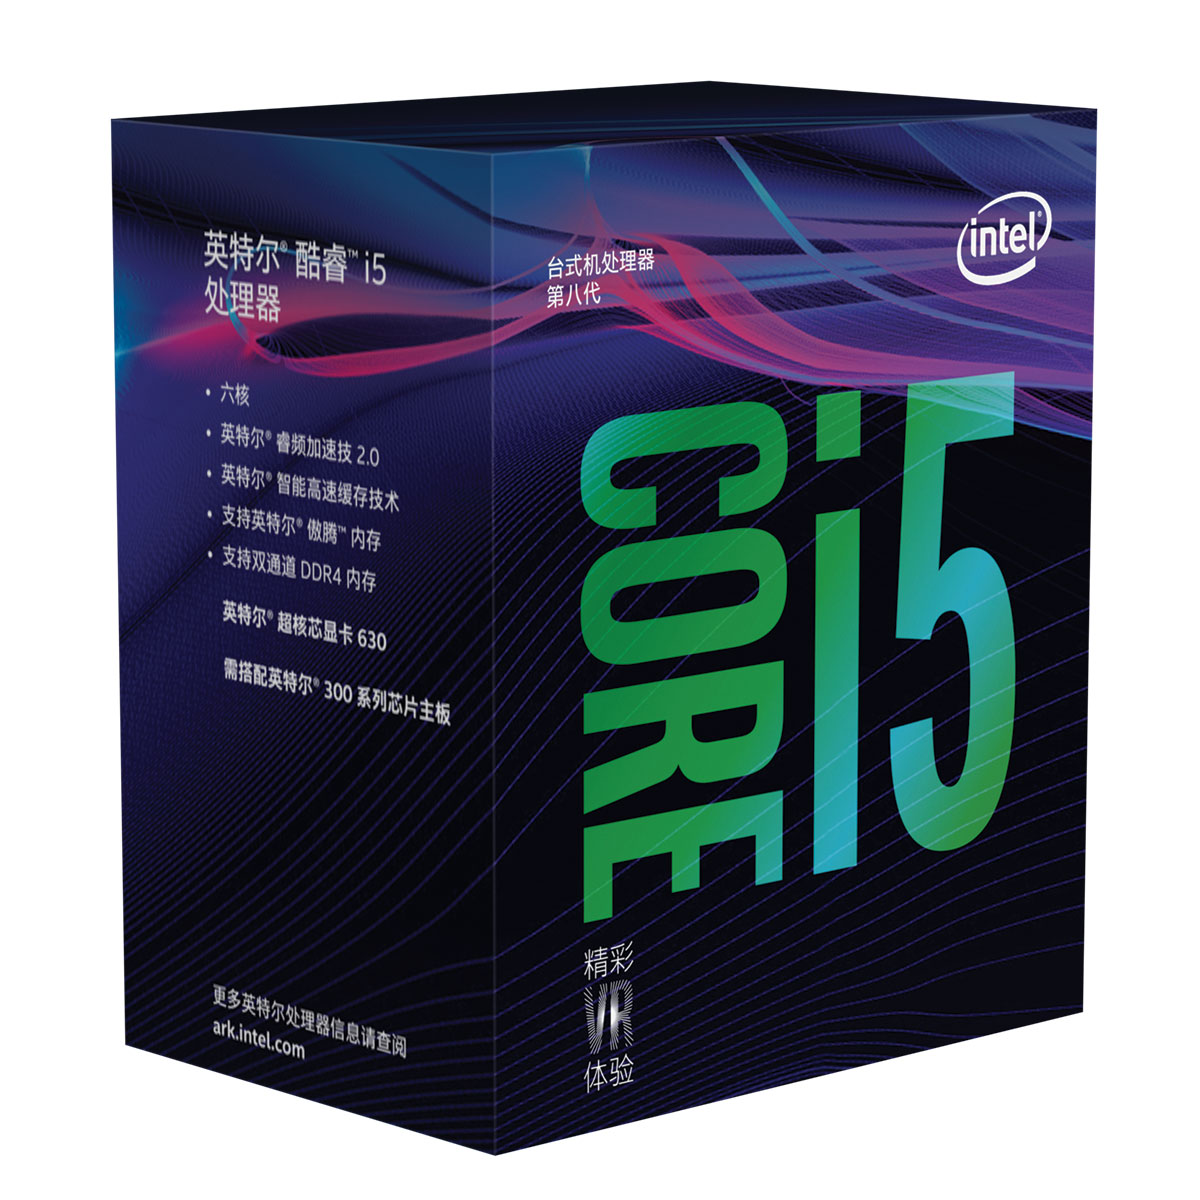 Core i5-8600K (3.6 GHz)